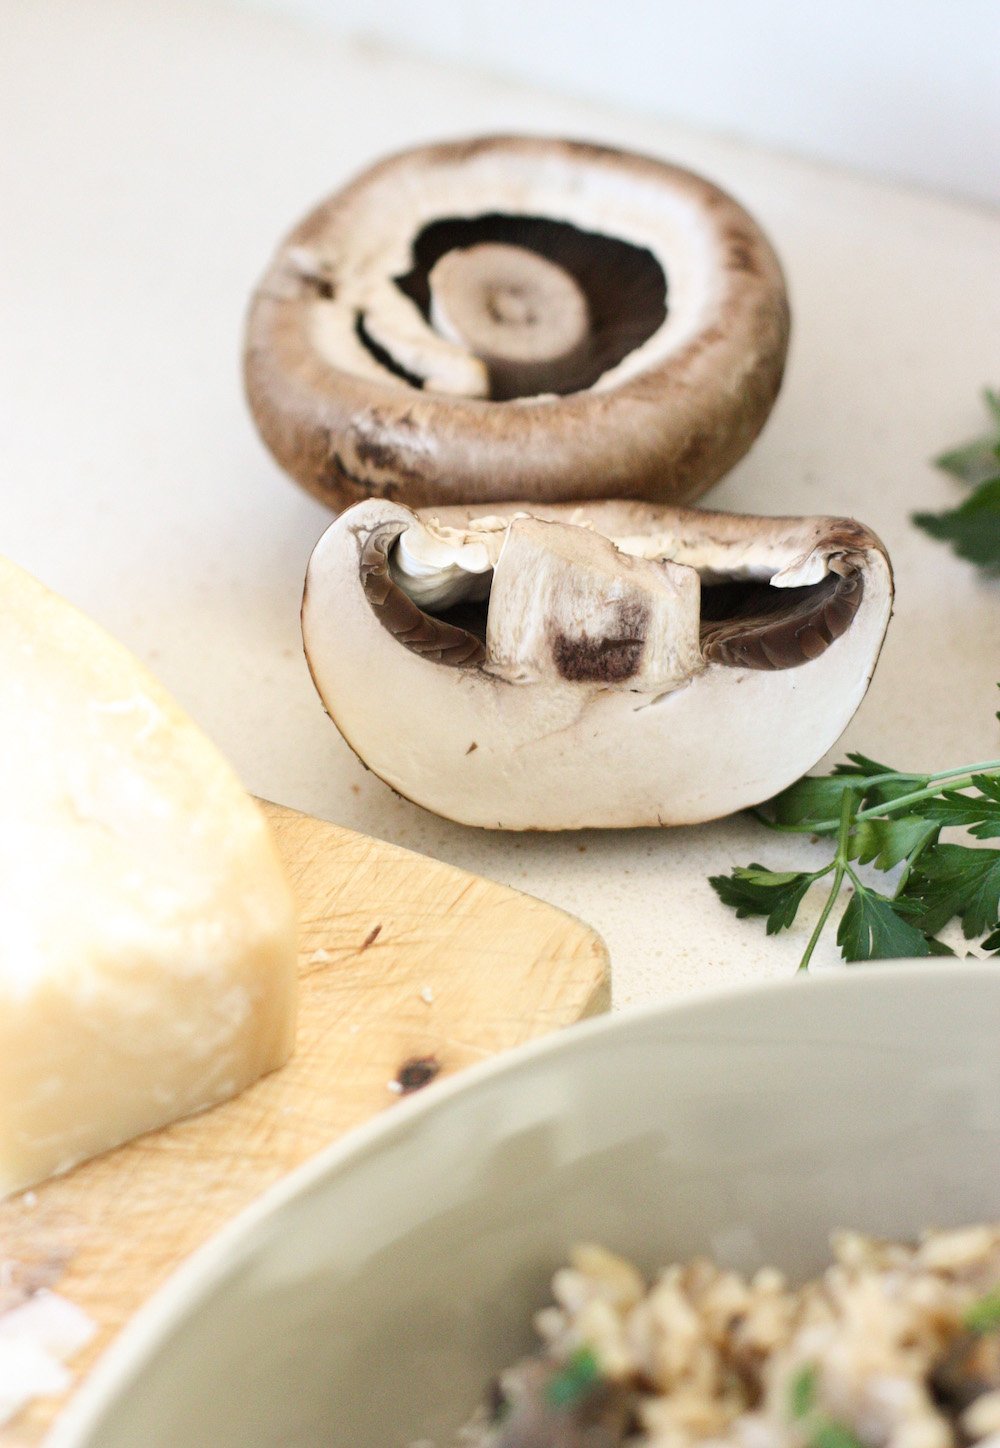 Oven Baked Mushroom Risotto - mushrooms